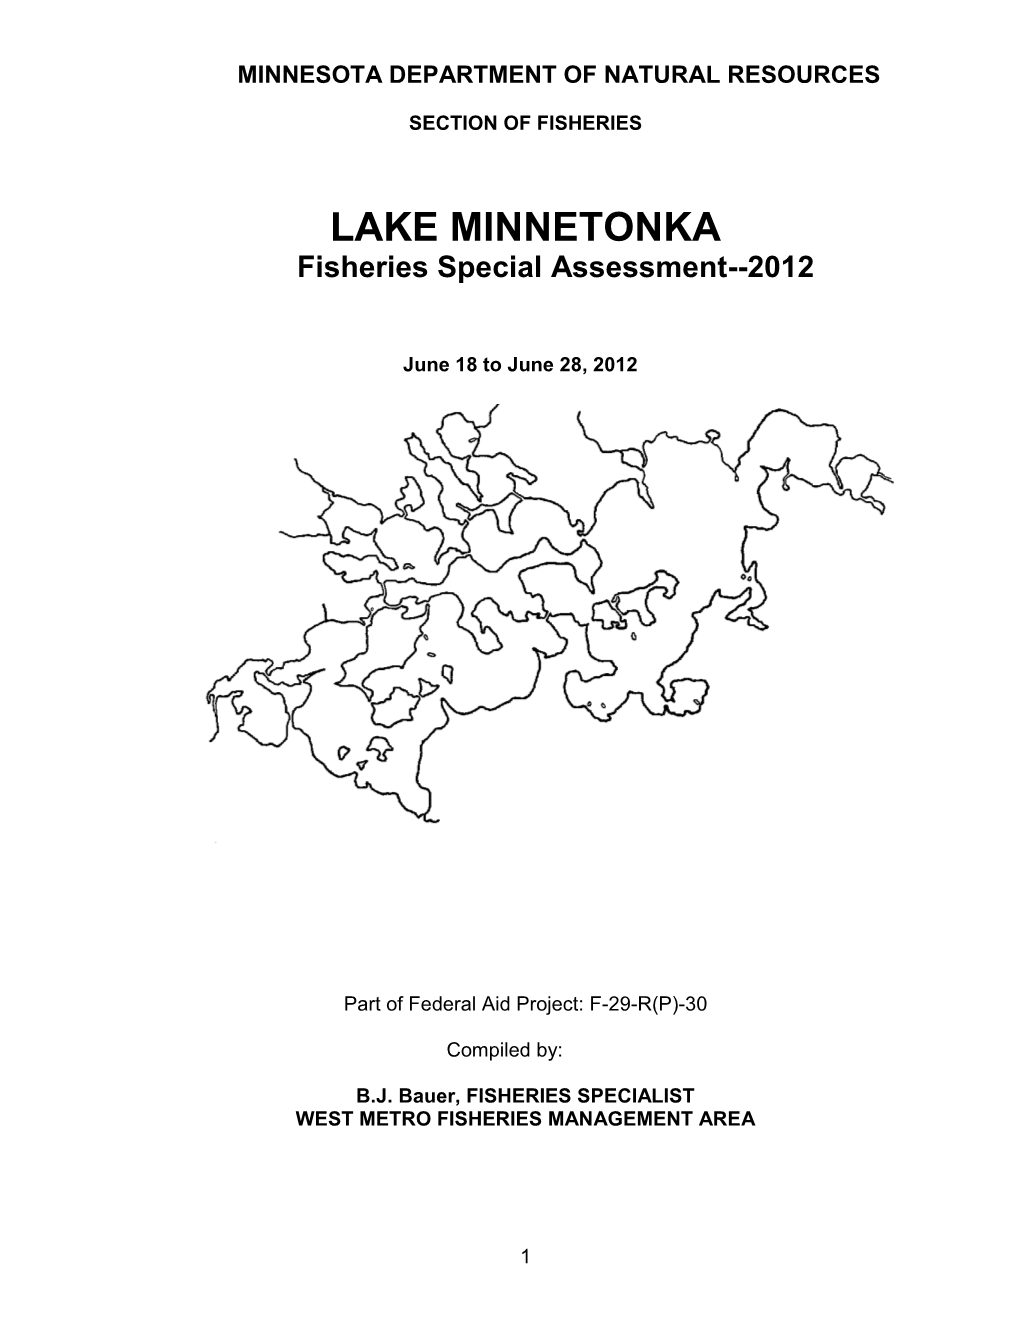 LAKE MINNETONKA Fisheries Special Assessment--2012